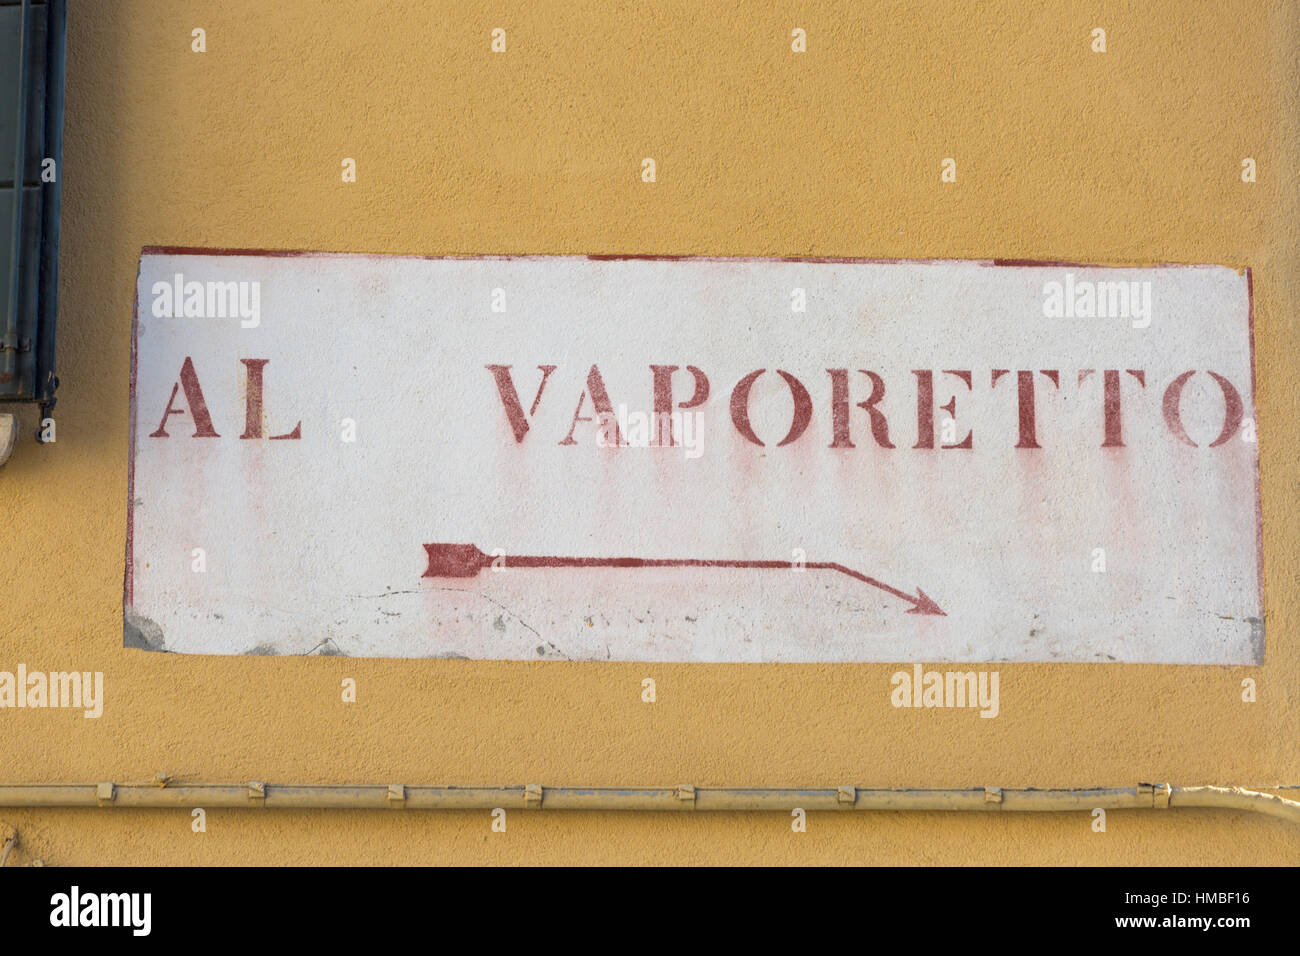 Al vaporetto sign in Venice, Italy in January Stock Photo